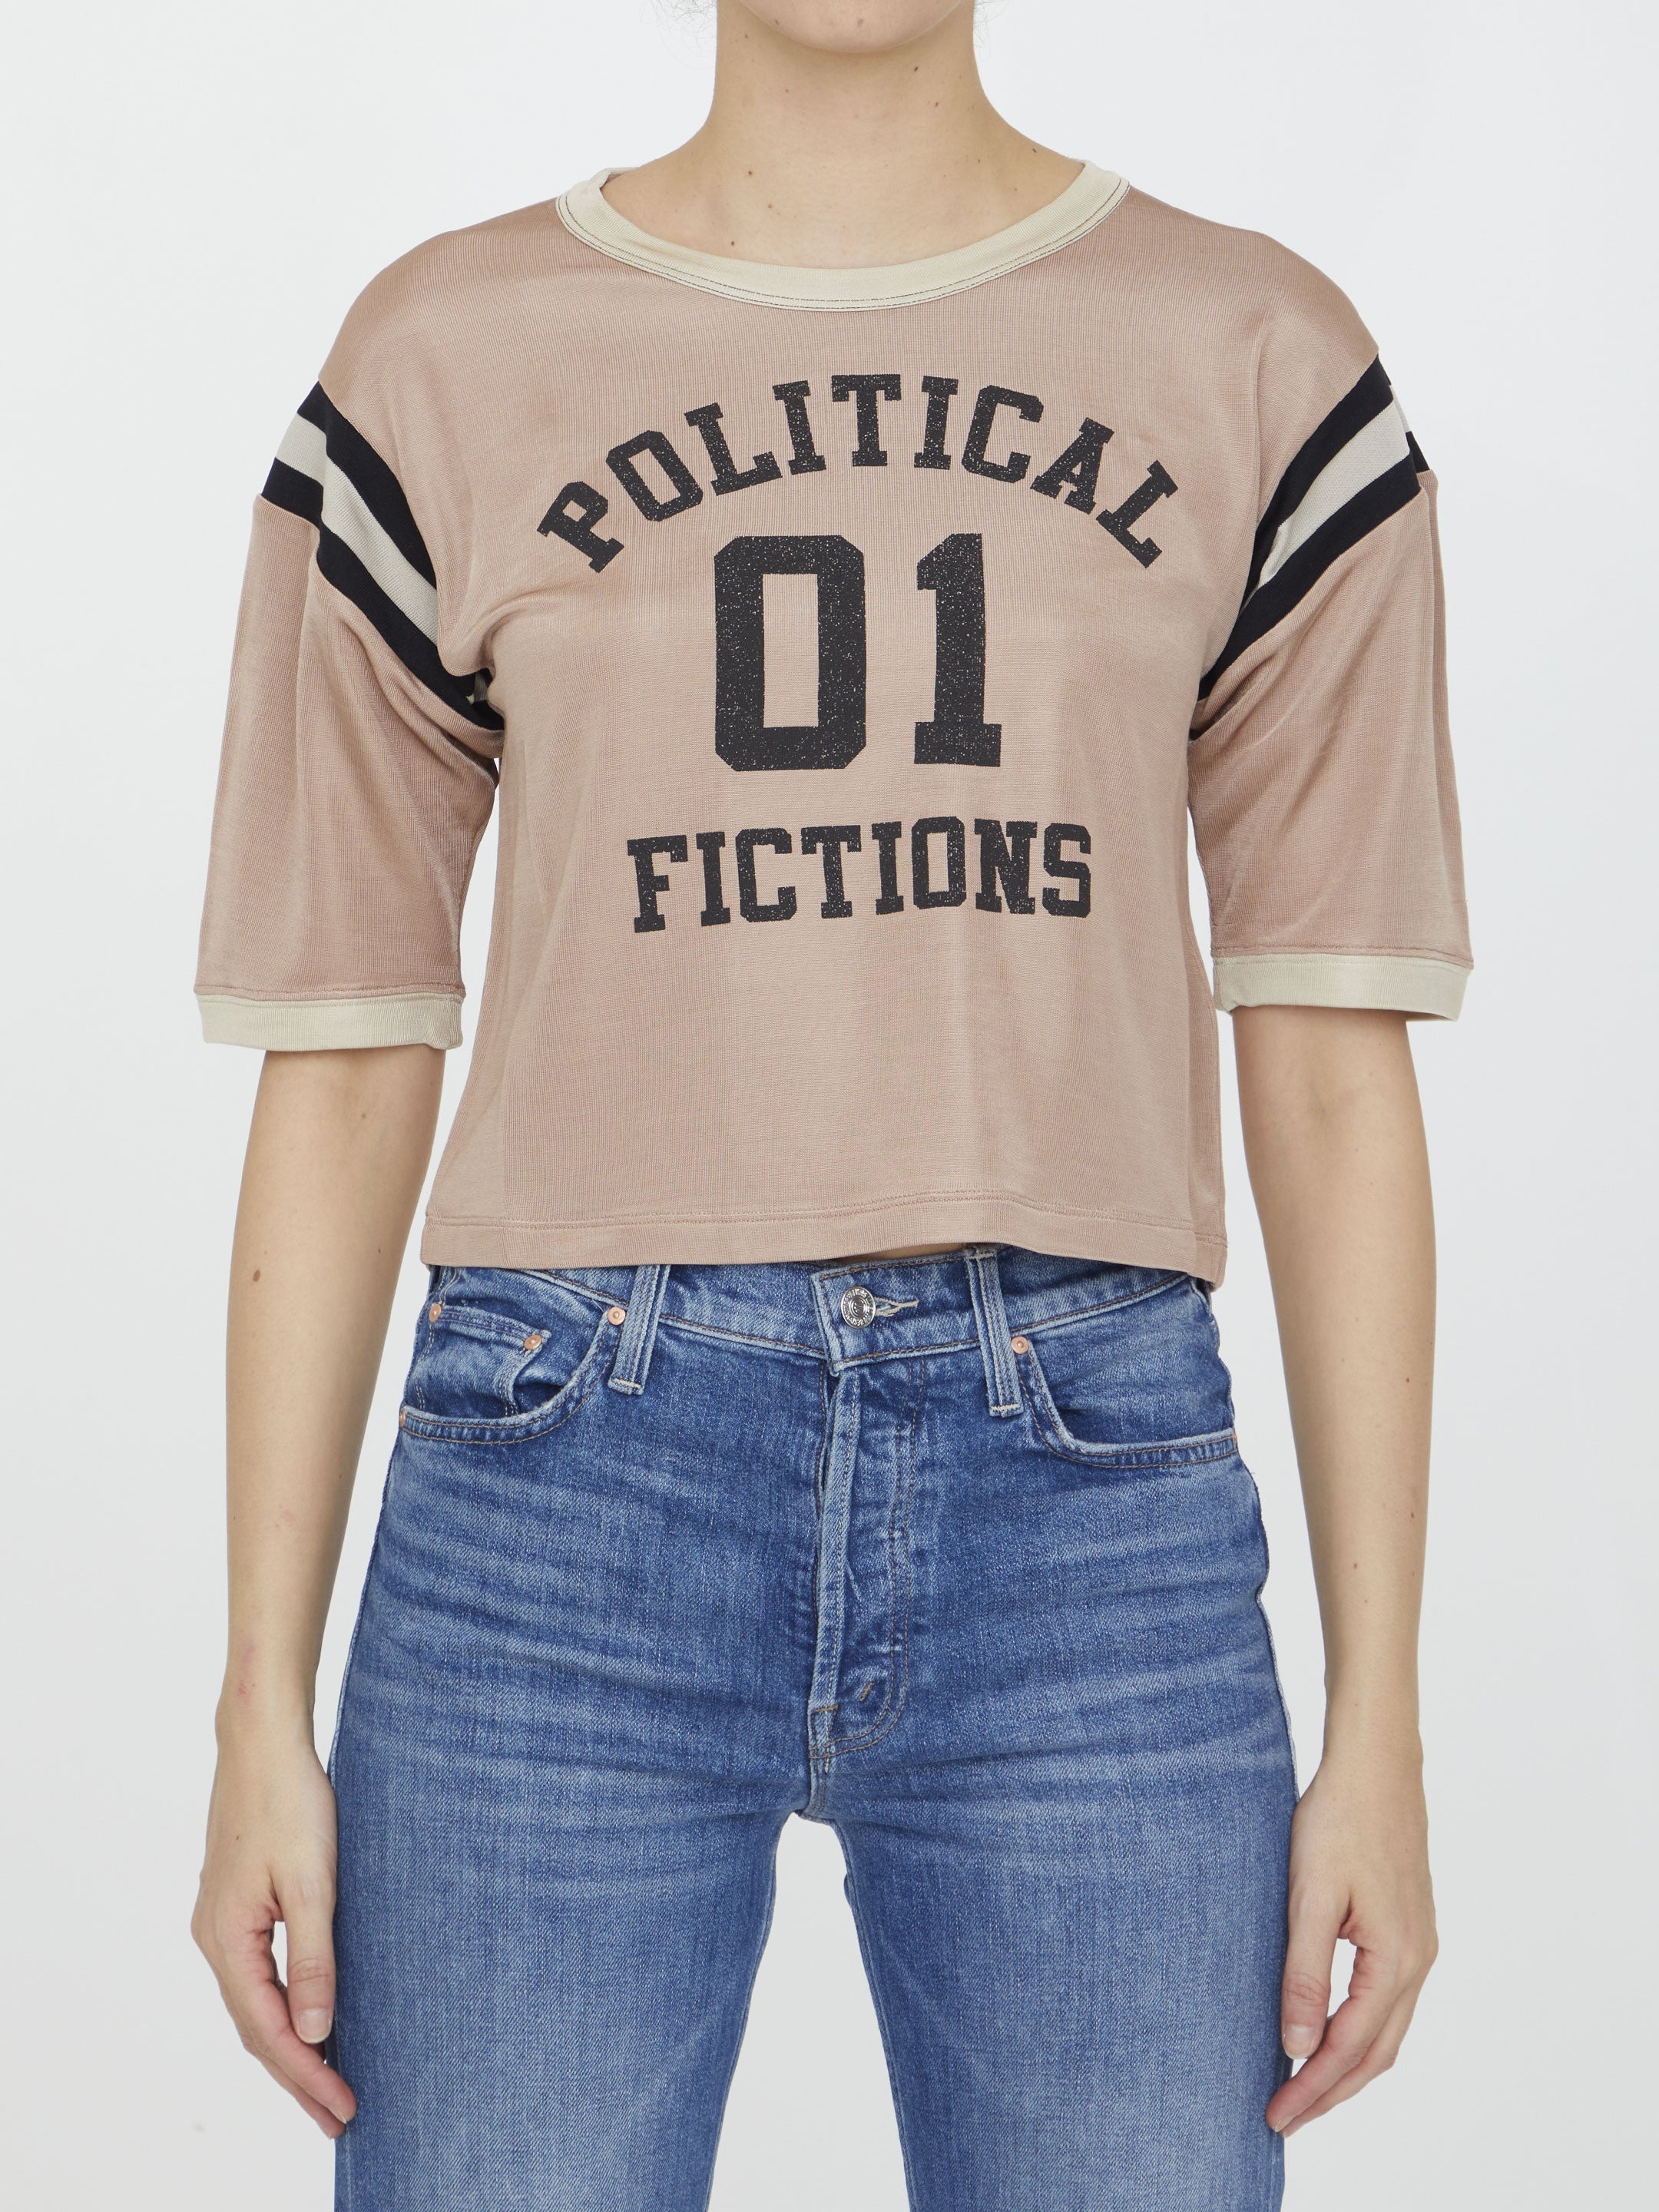 SAINT-LAURENT-OUTLET-SALE-Political-Fictions-cropped-t-shirt-Shirts-S-PINK-ARCHIVE-COLLECTION.jpg